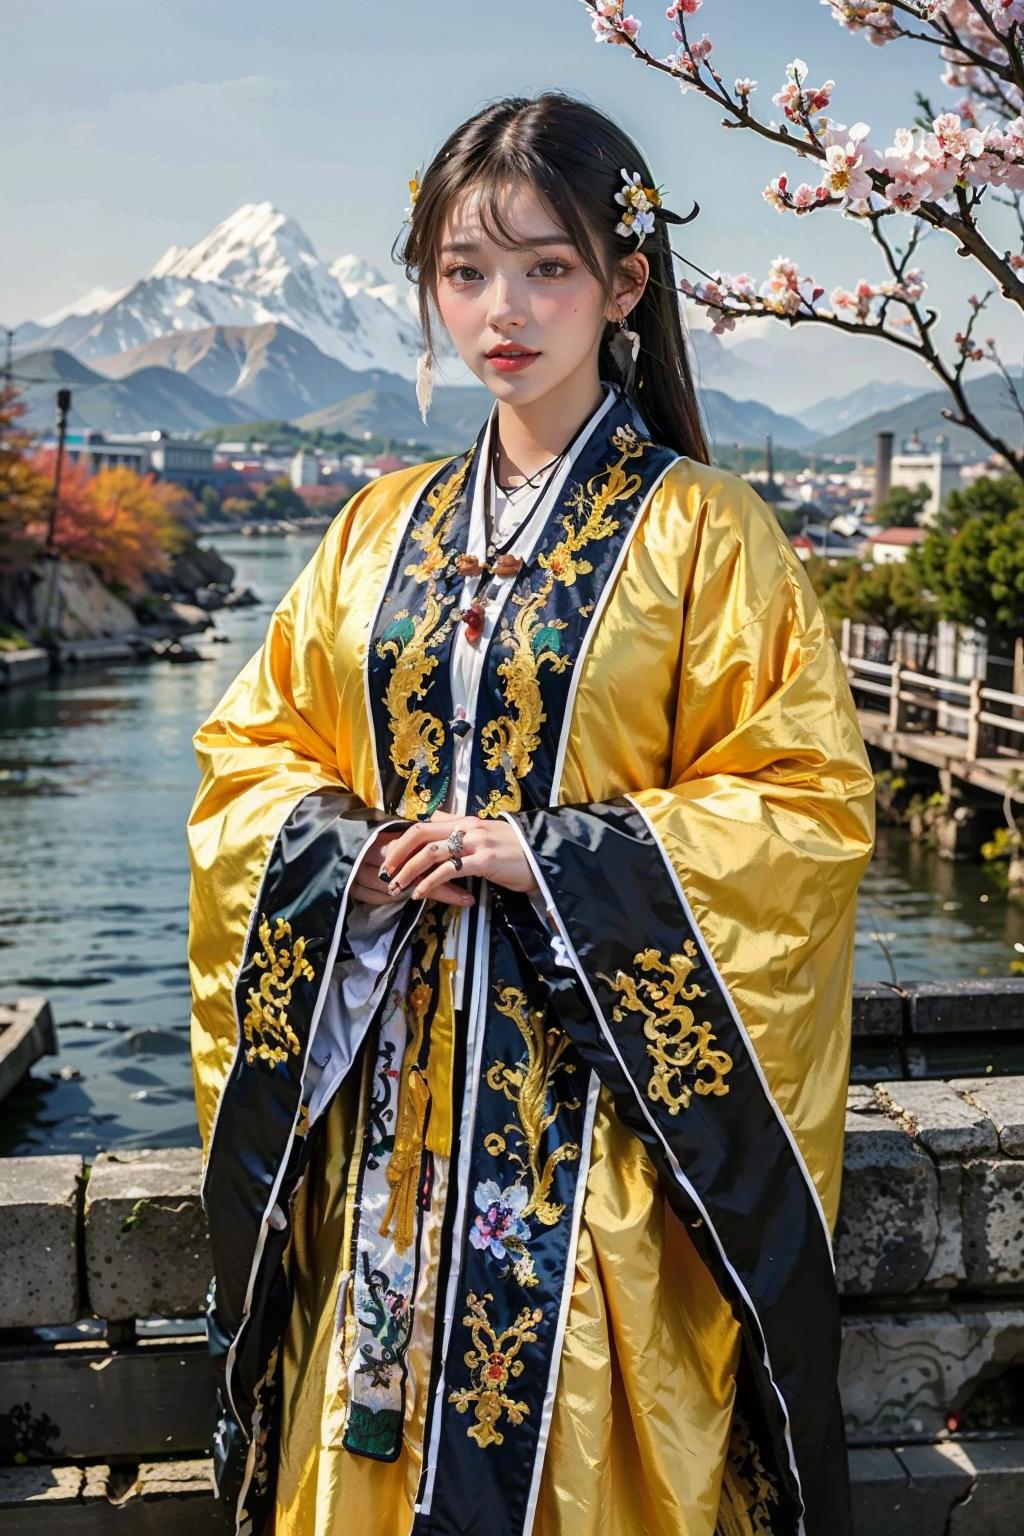 Daoist Robe - 天師派道袍 image by ssugar008